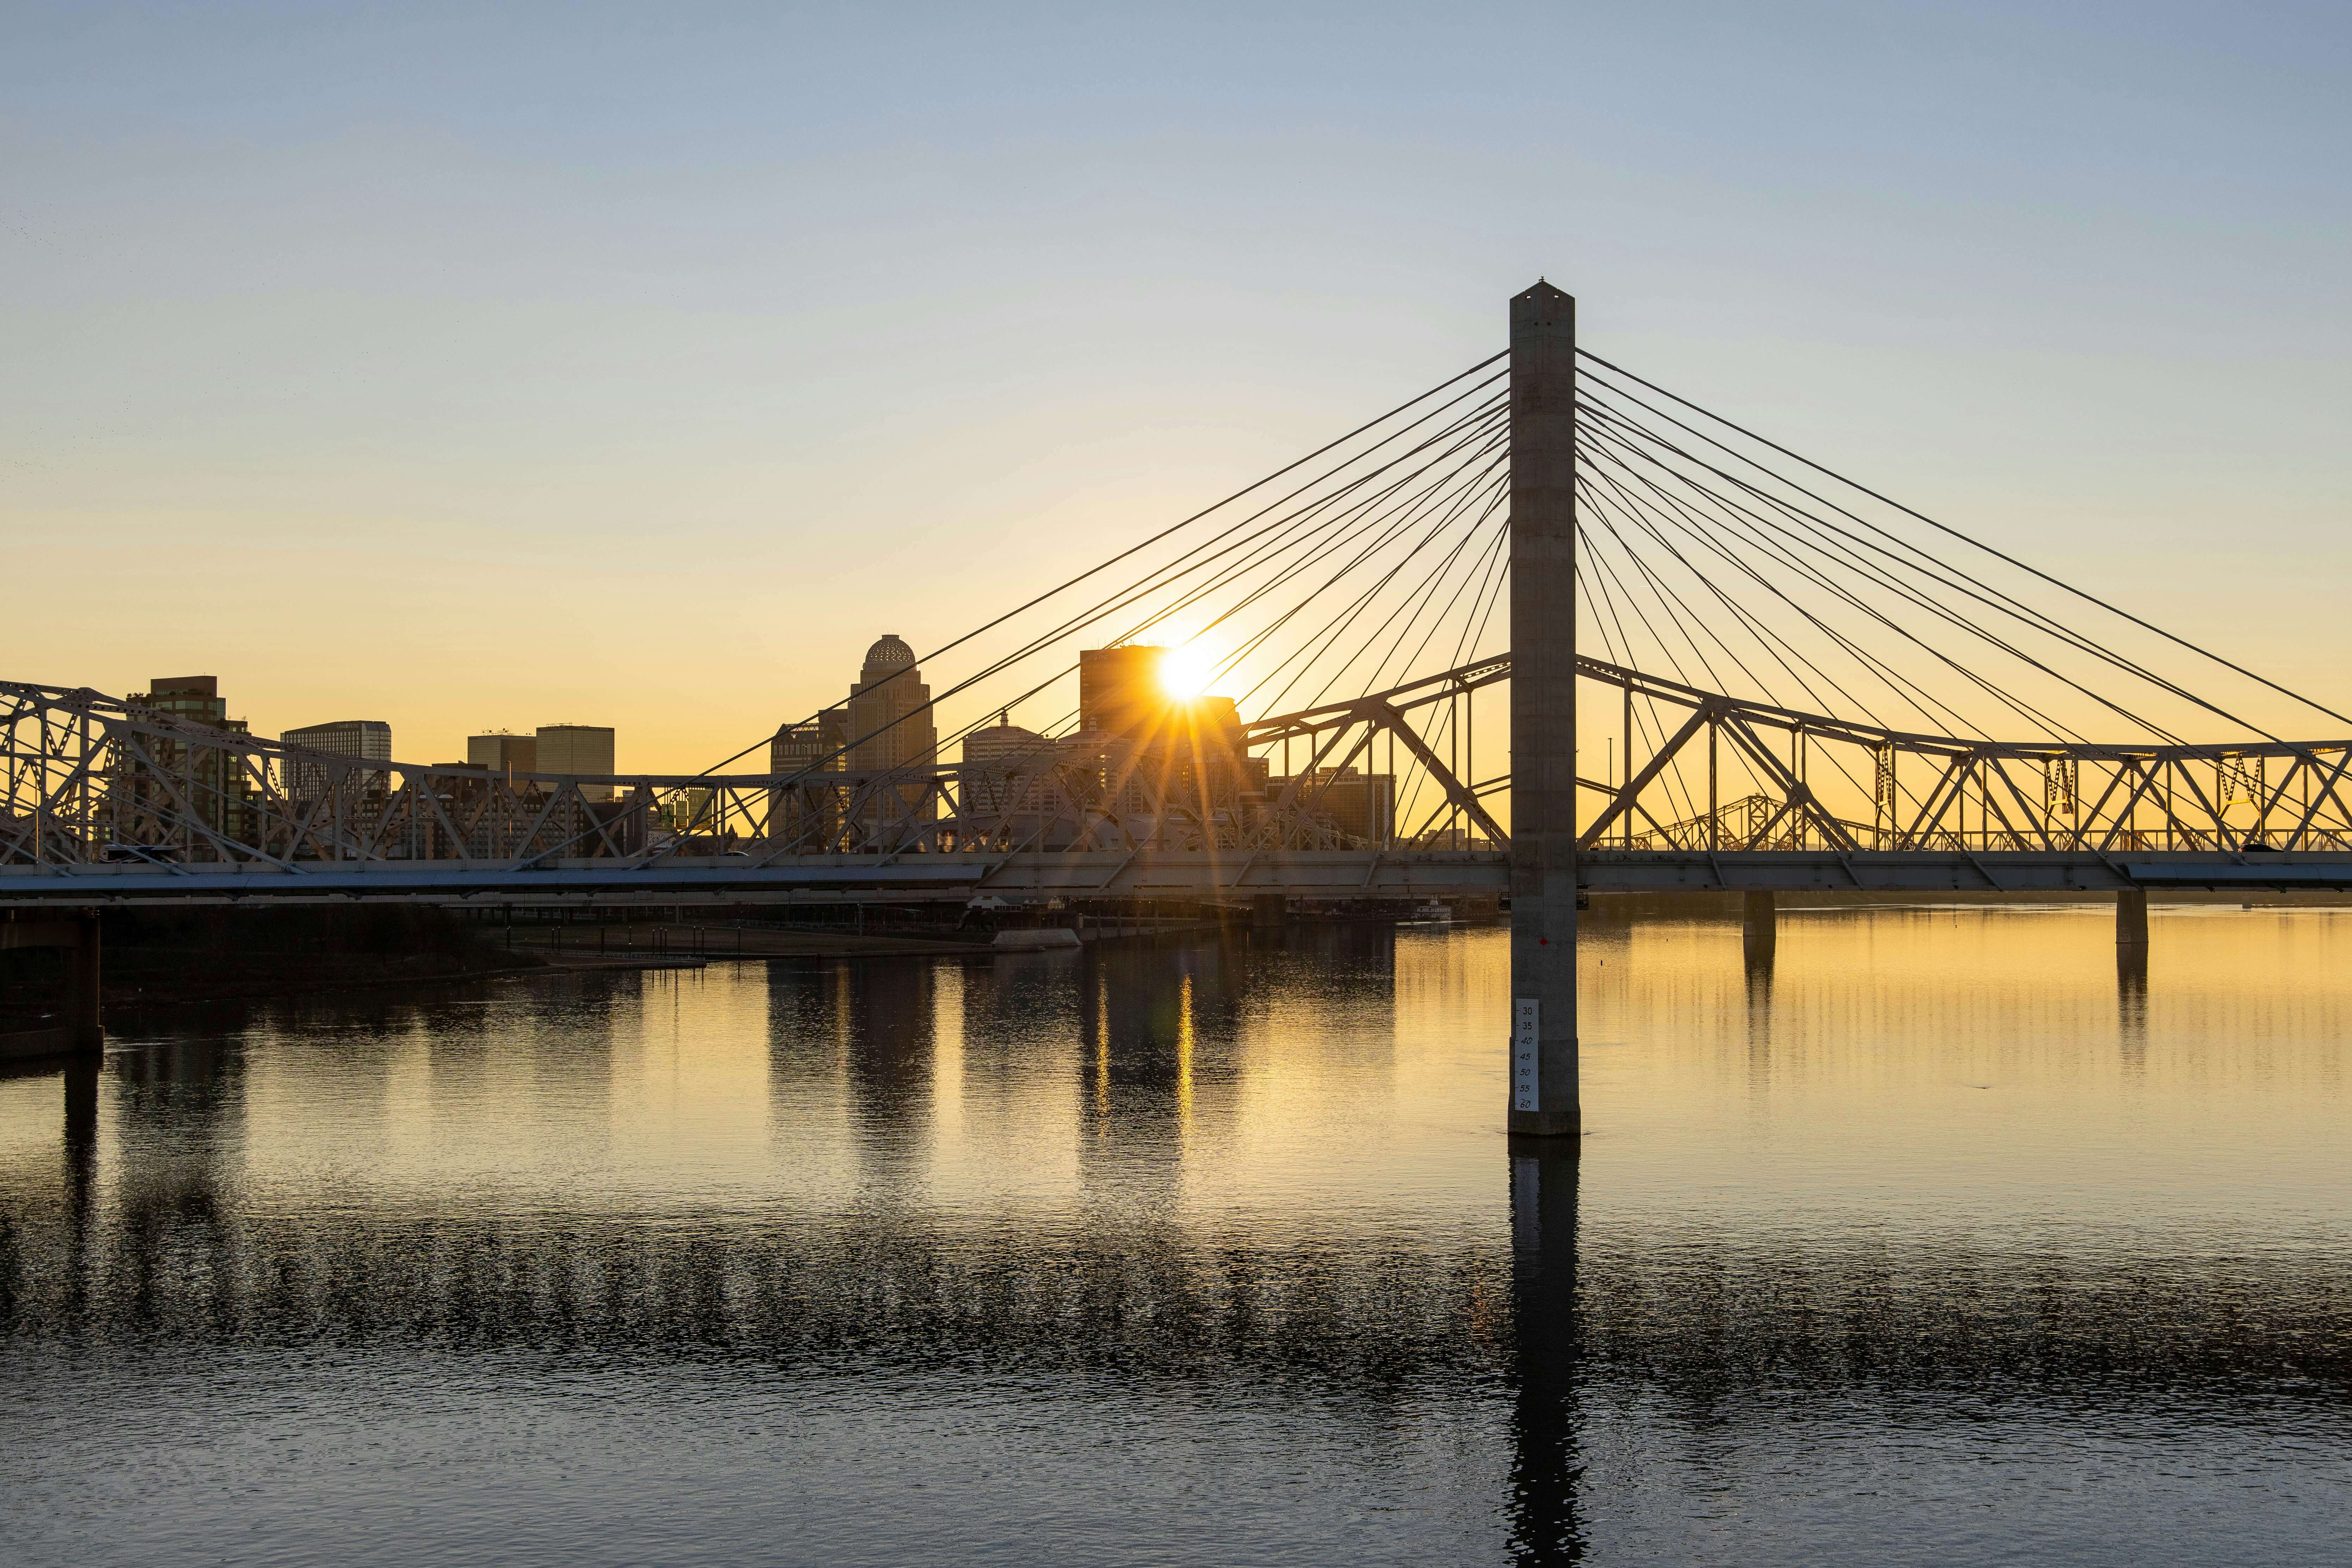 view of Louisville, Kentucky across a river at sunset